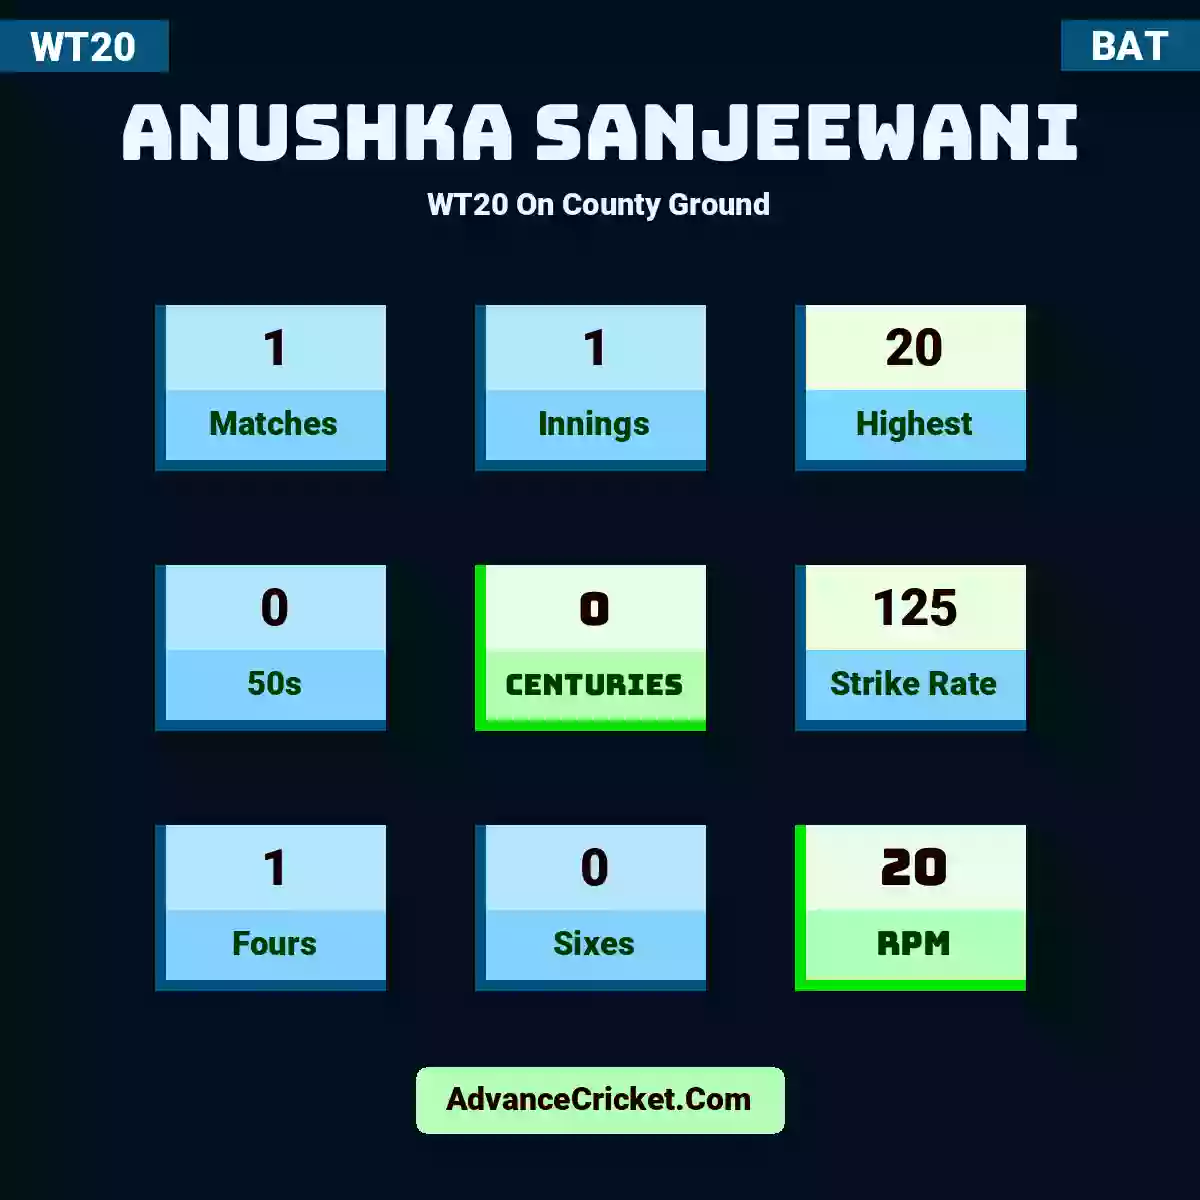 Anushka Sanjeewani WT20  On County Ground, Anushka Sanjeewani played 1 matches, scored 1 runs as highest, 0 half-centuries, and 0 centuries, with a strike rate of 25. A.Sanjeewani hit 0 fours and 0 sixes, with an RPM of 1.